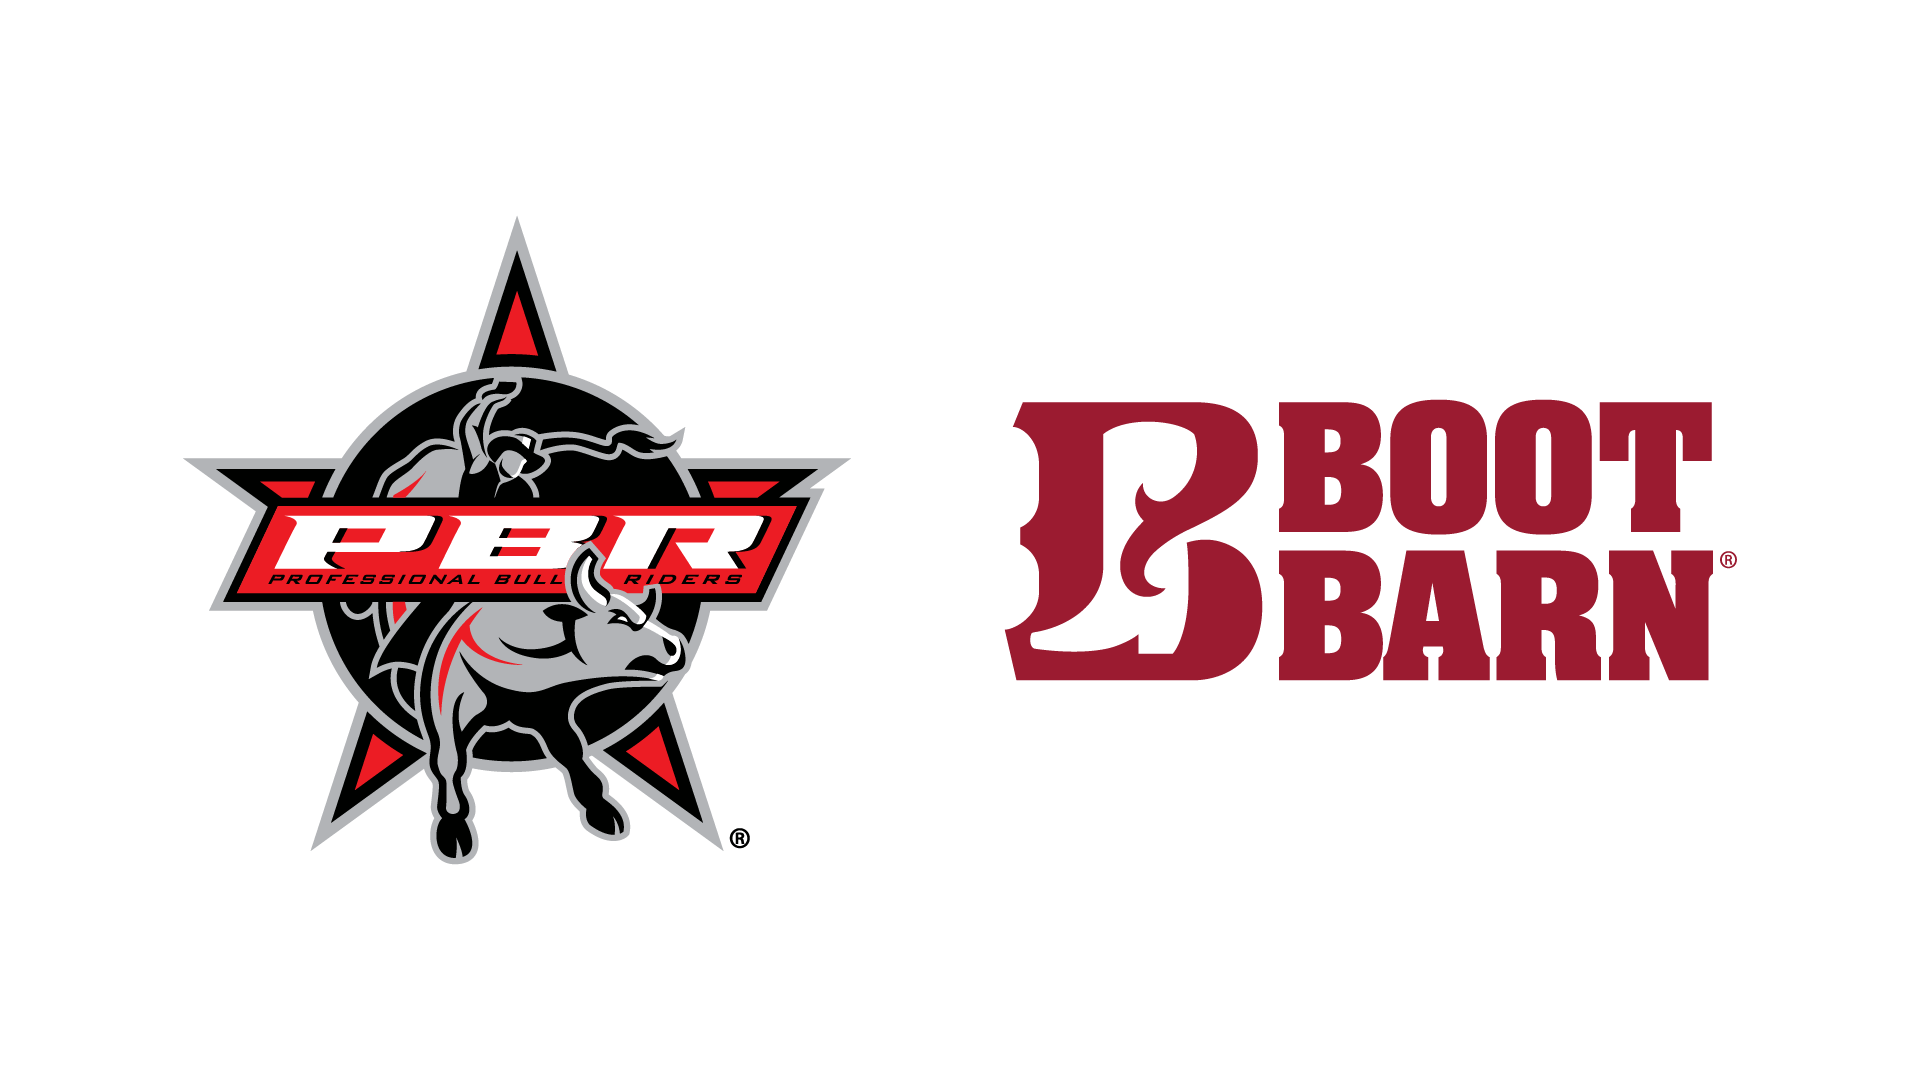 BootBarn Logo - Professional Bull Riders & Boot Barn (NYSE: BOOT) Ring the NYSE